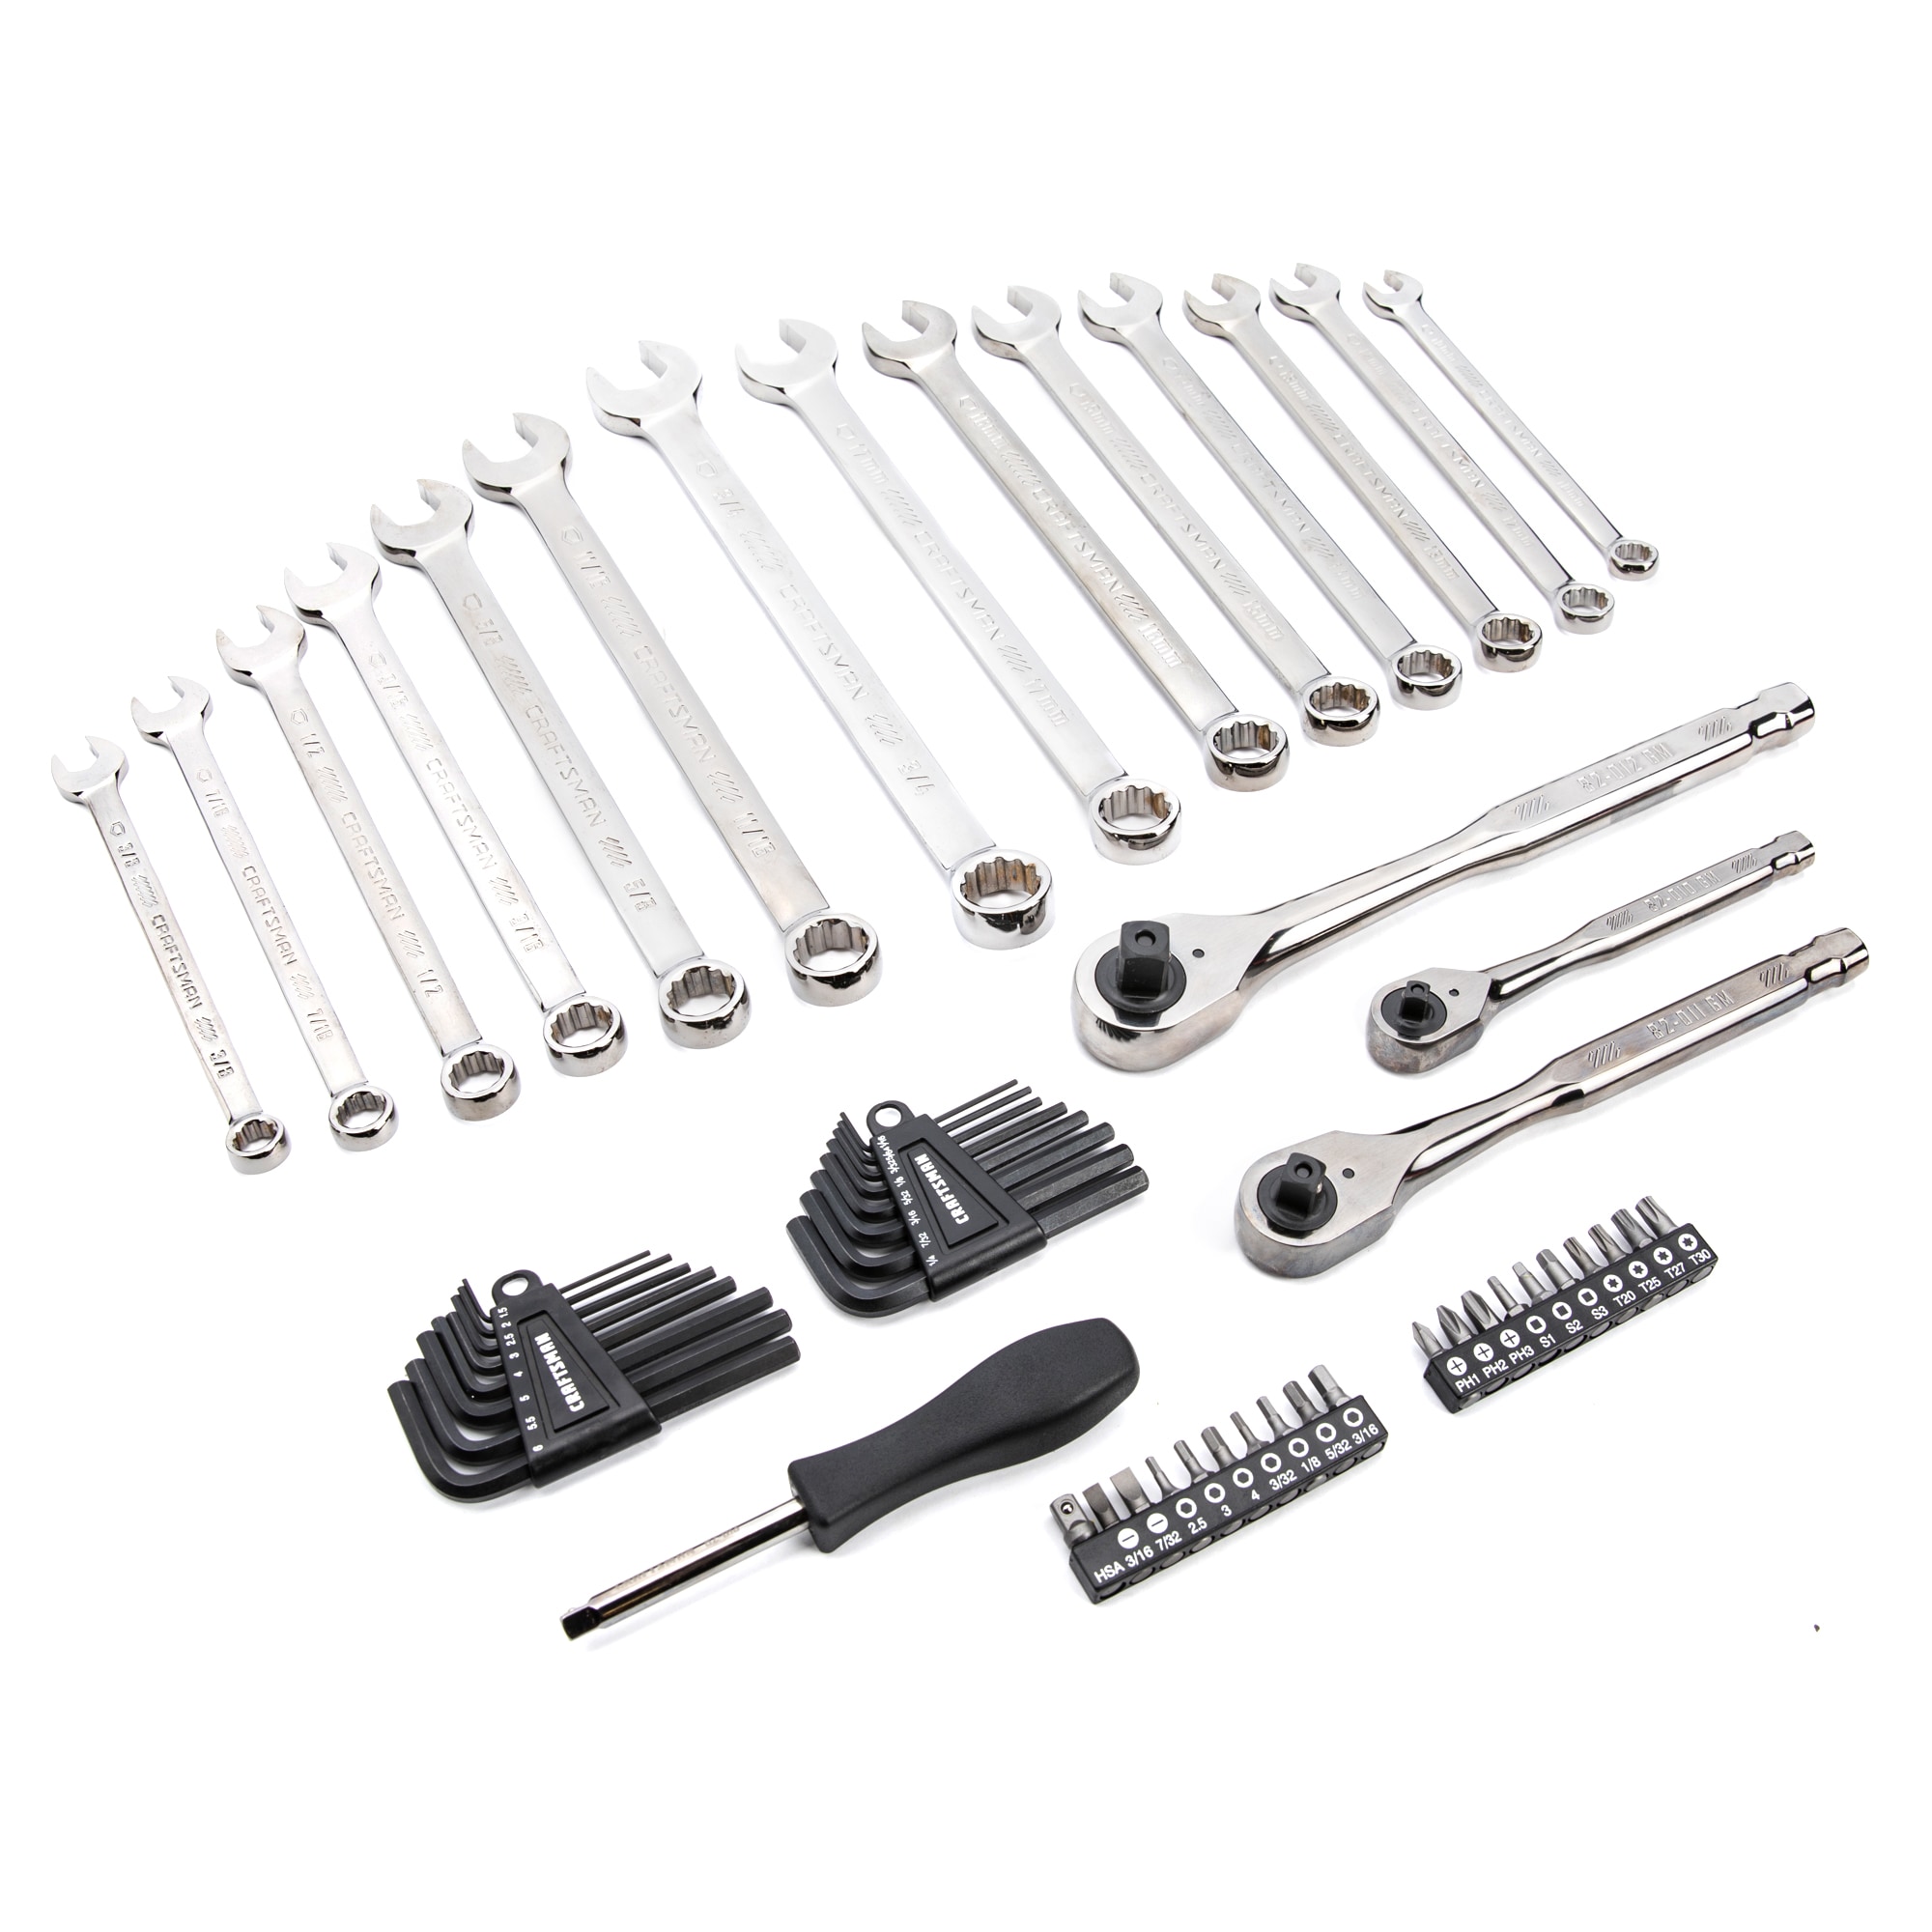 150 pieces mechanics socket wrench tool